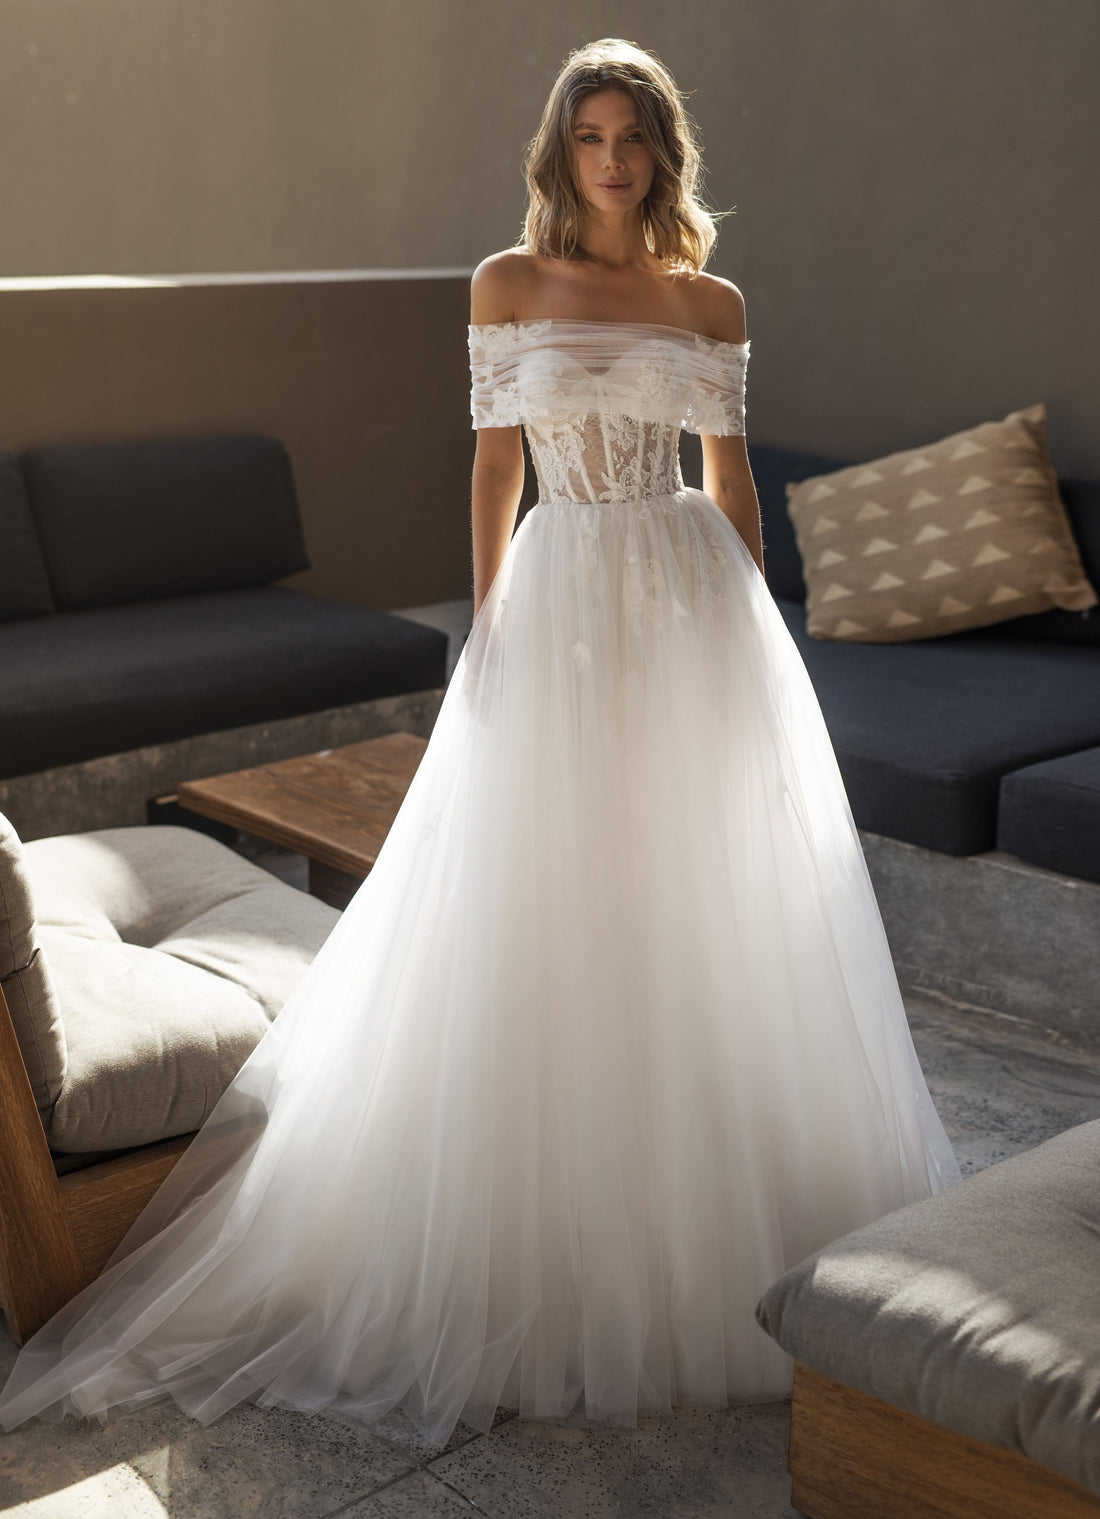  Timeless Elegance and Comfort - Romanova Atelier's Light Wedding Gowns